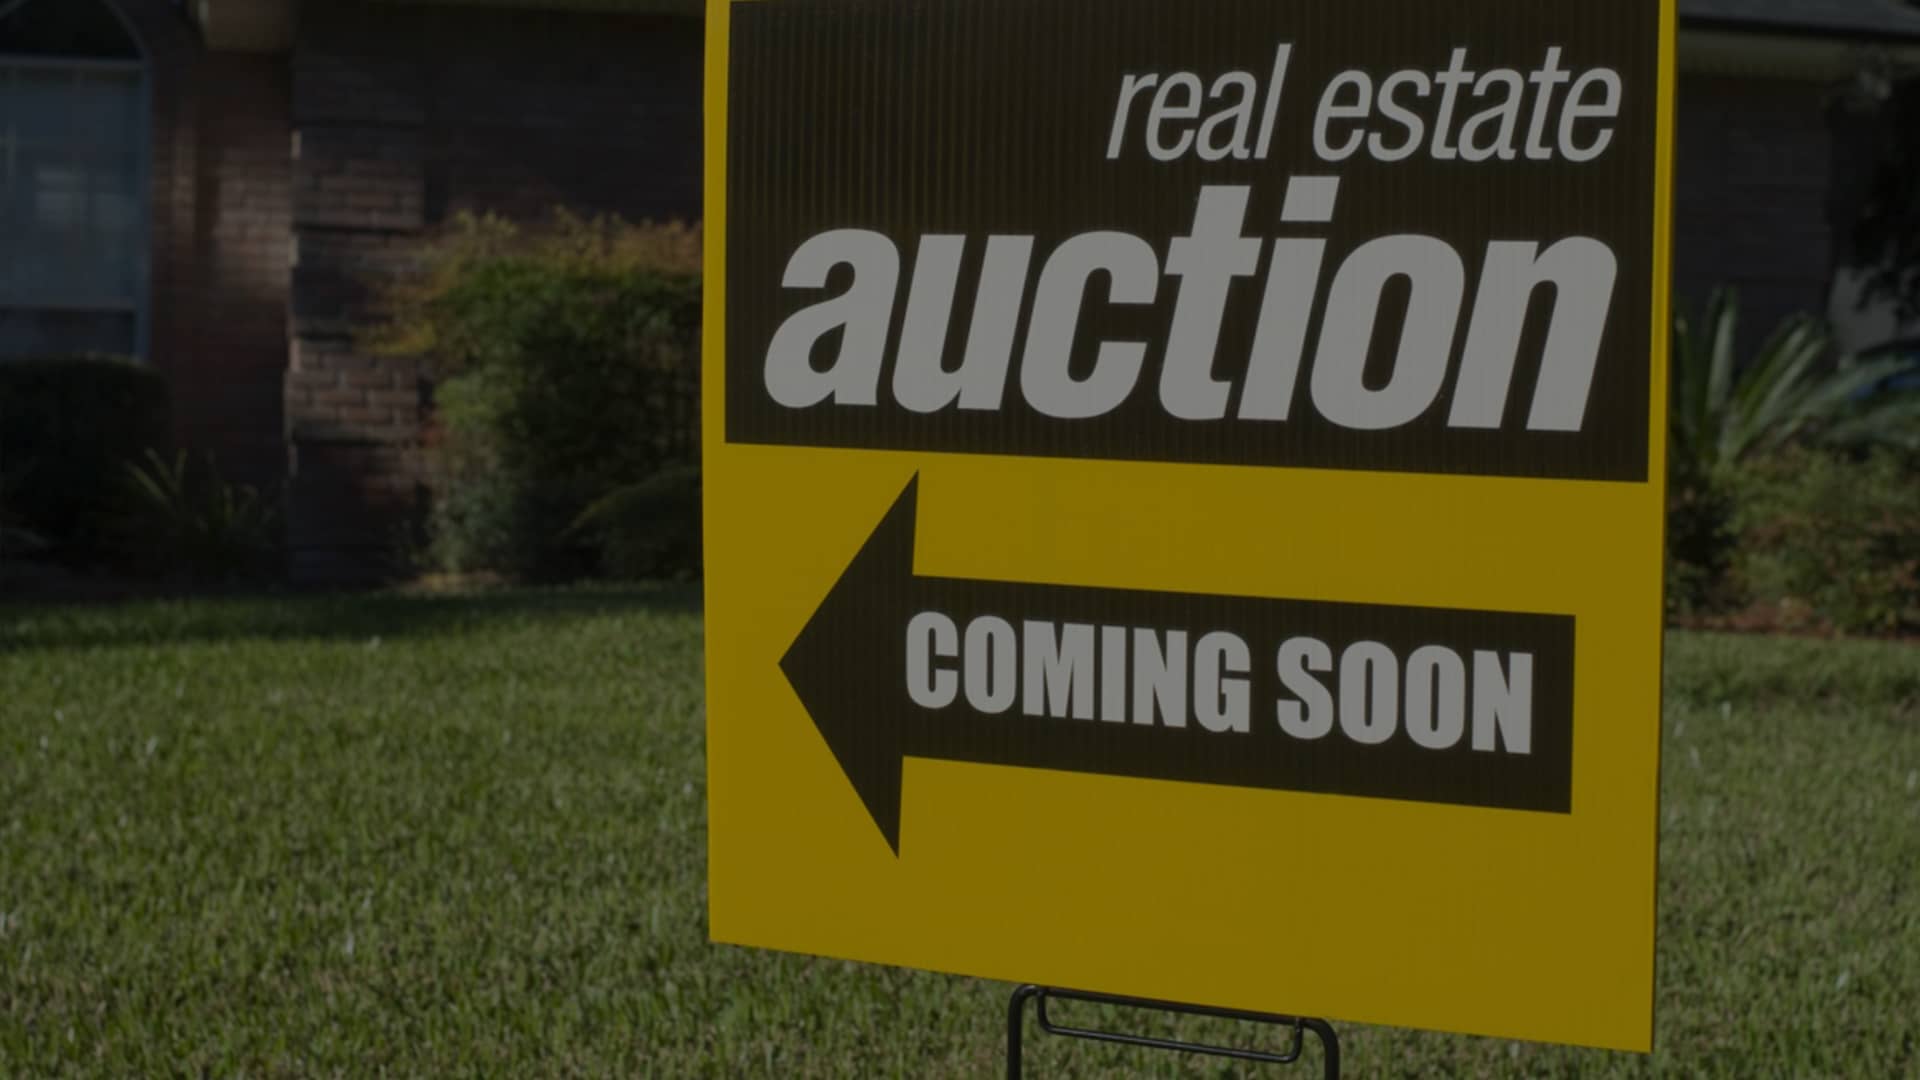 Real estate auction yard signage